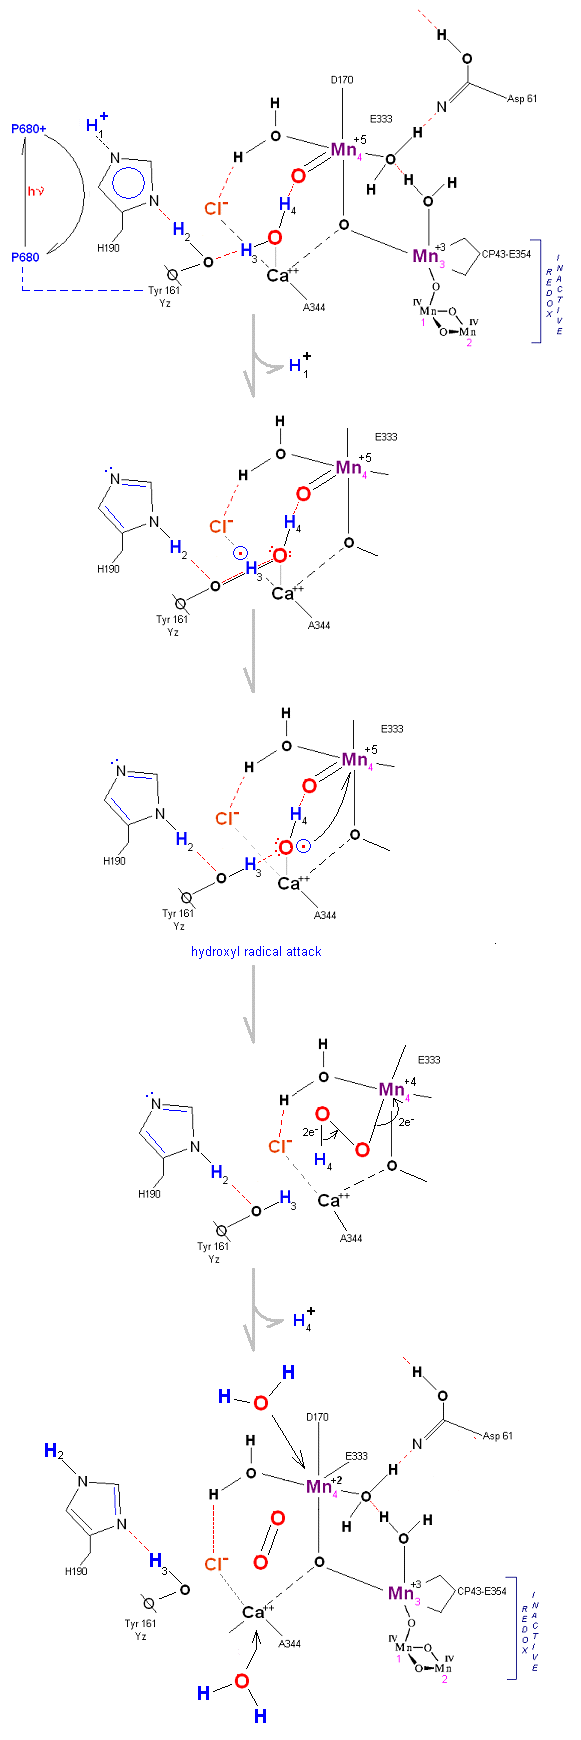 Alternate path of wate on oxo Manganese